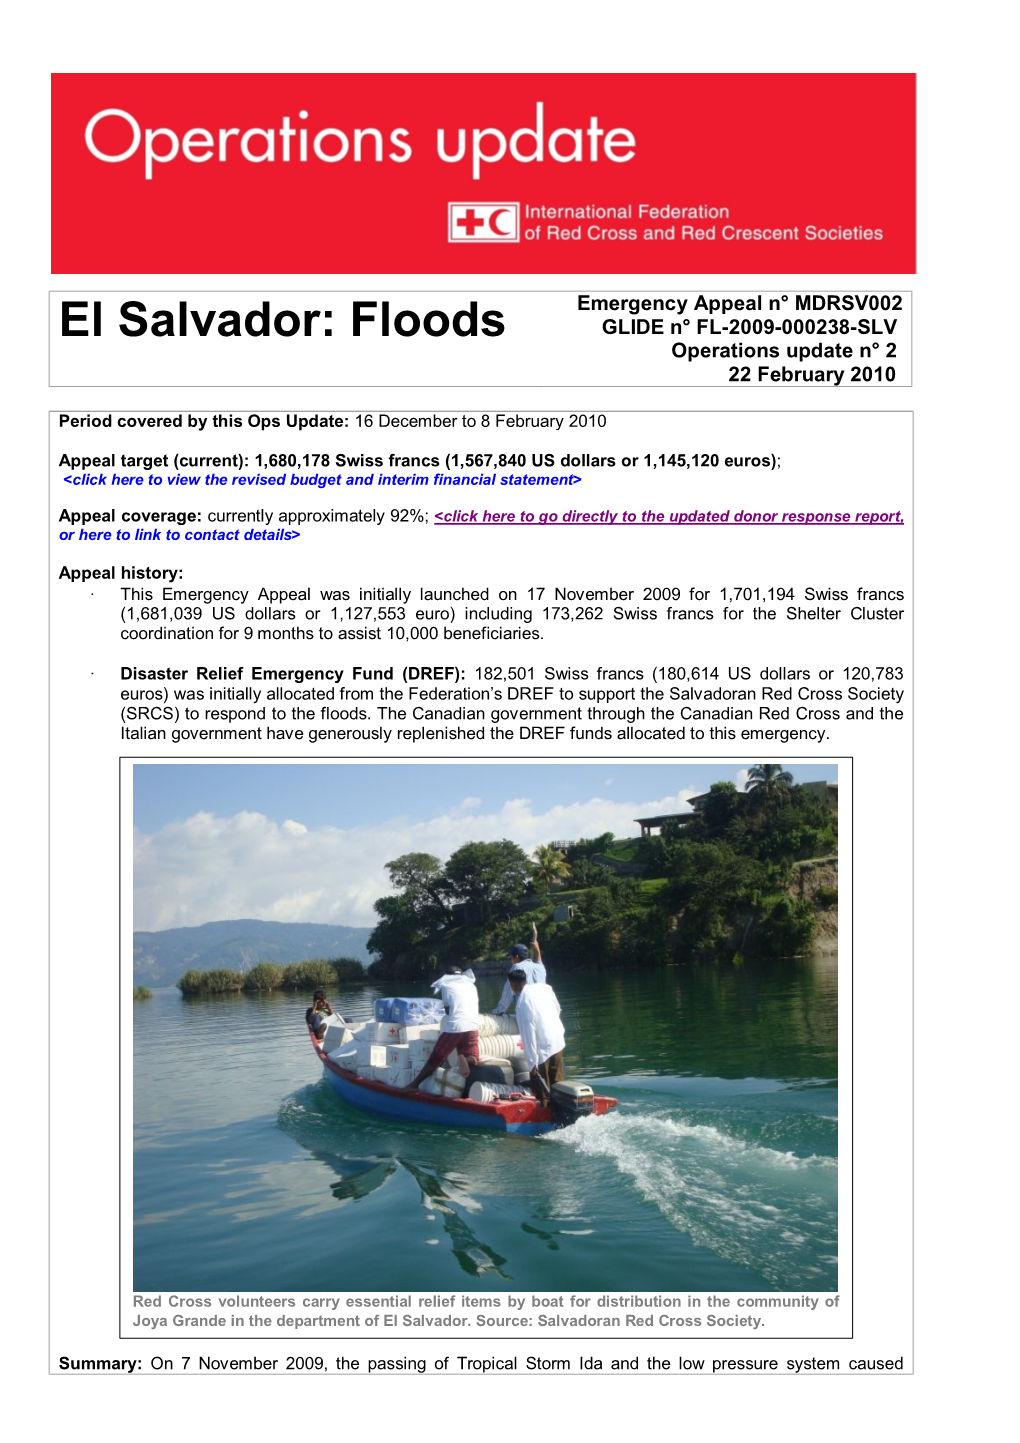 El Salvador: Floods GLIDE N° FL-2009-000238-SLV Operations Update N° 2 22 February 2010